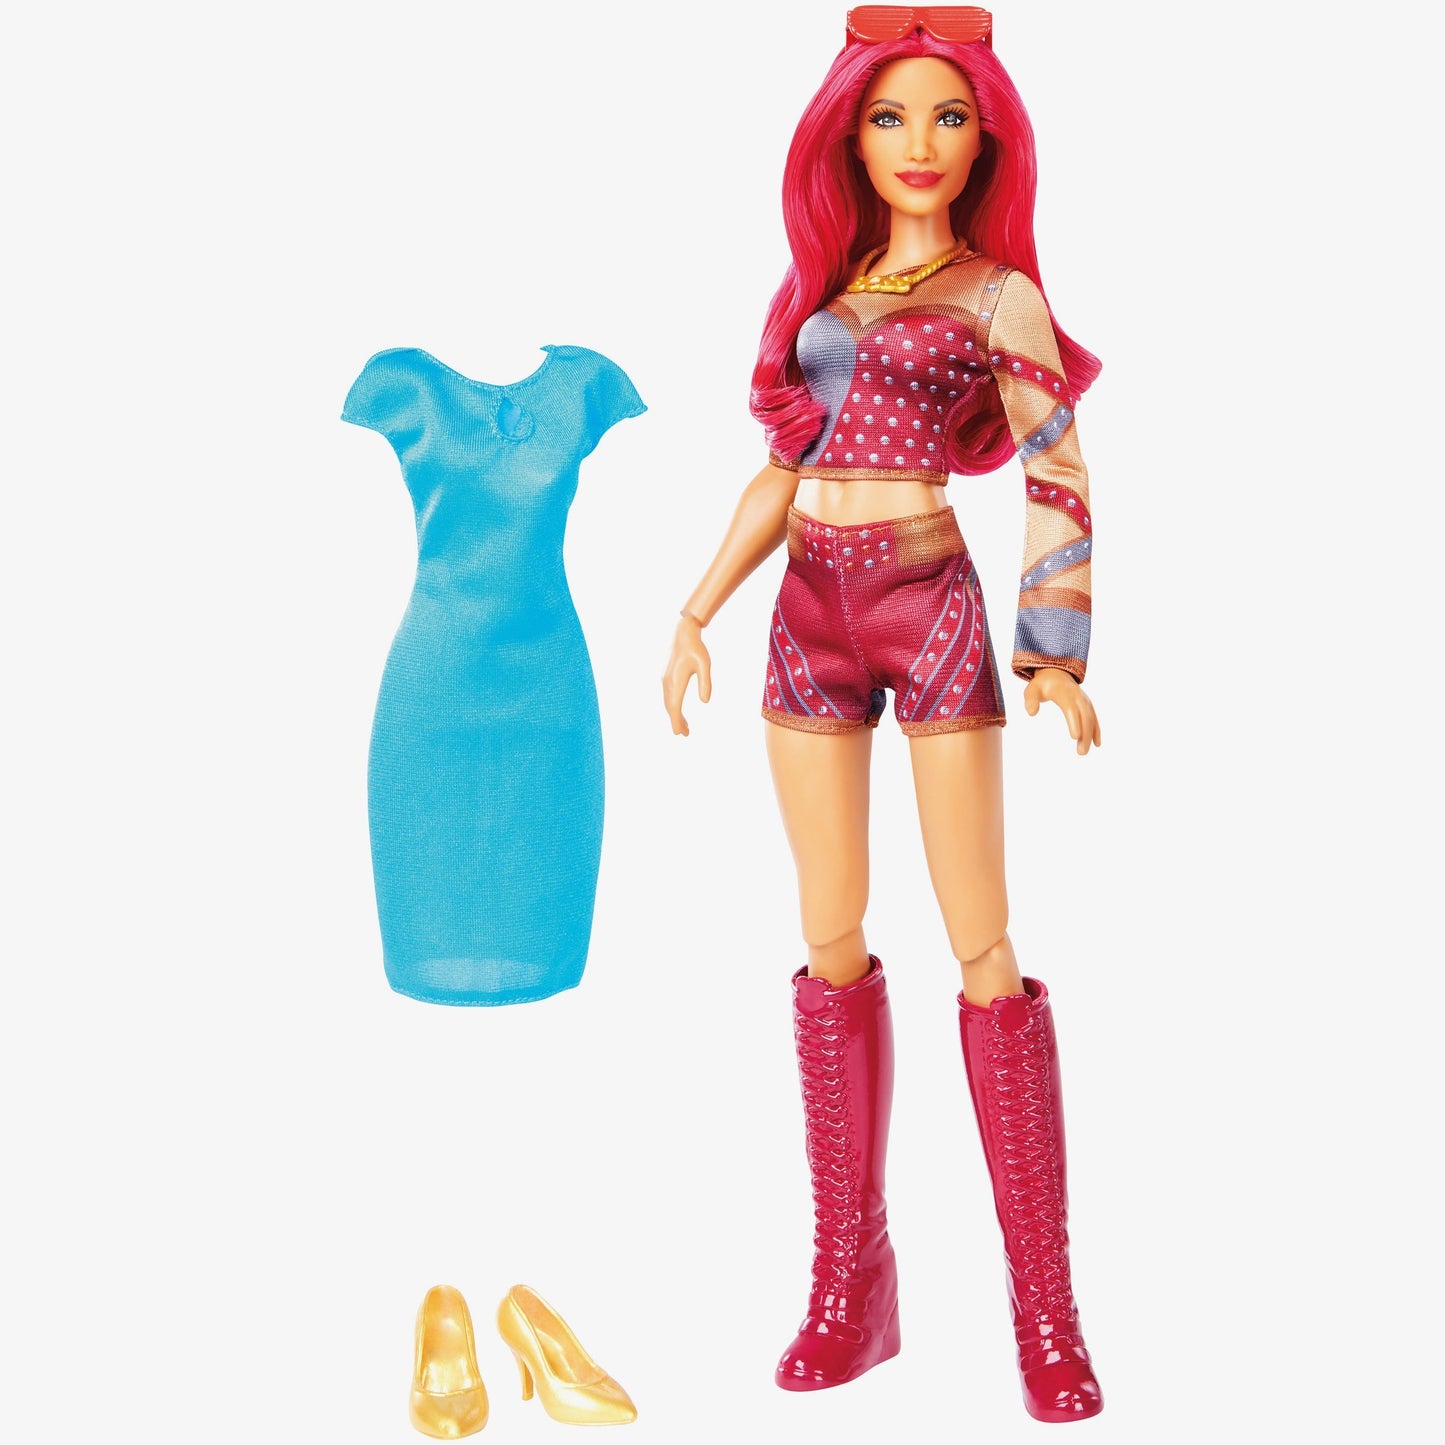 Sasha Banks - 12 inch WWE Fashion Doll (Blue Dress version)